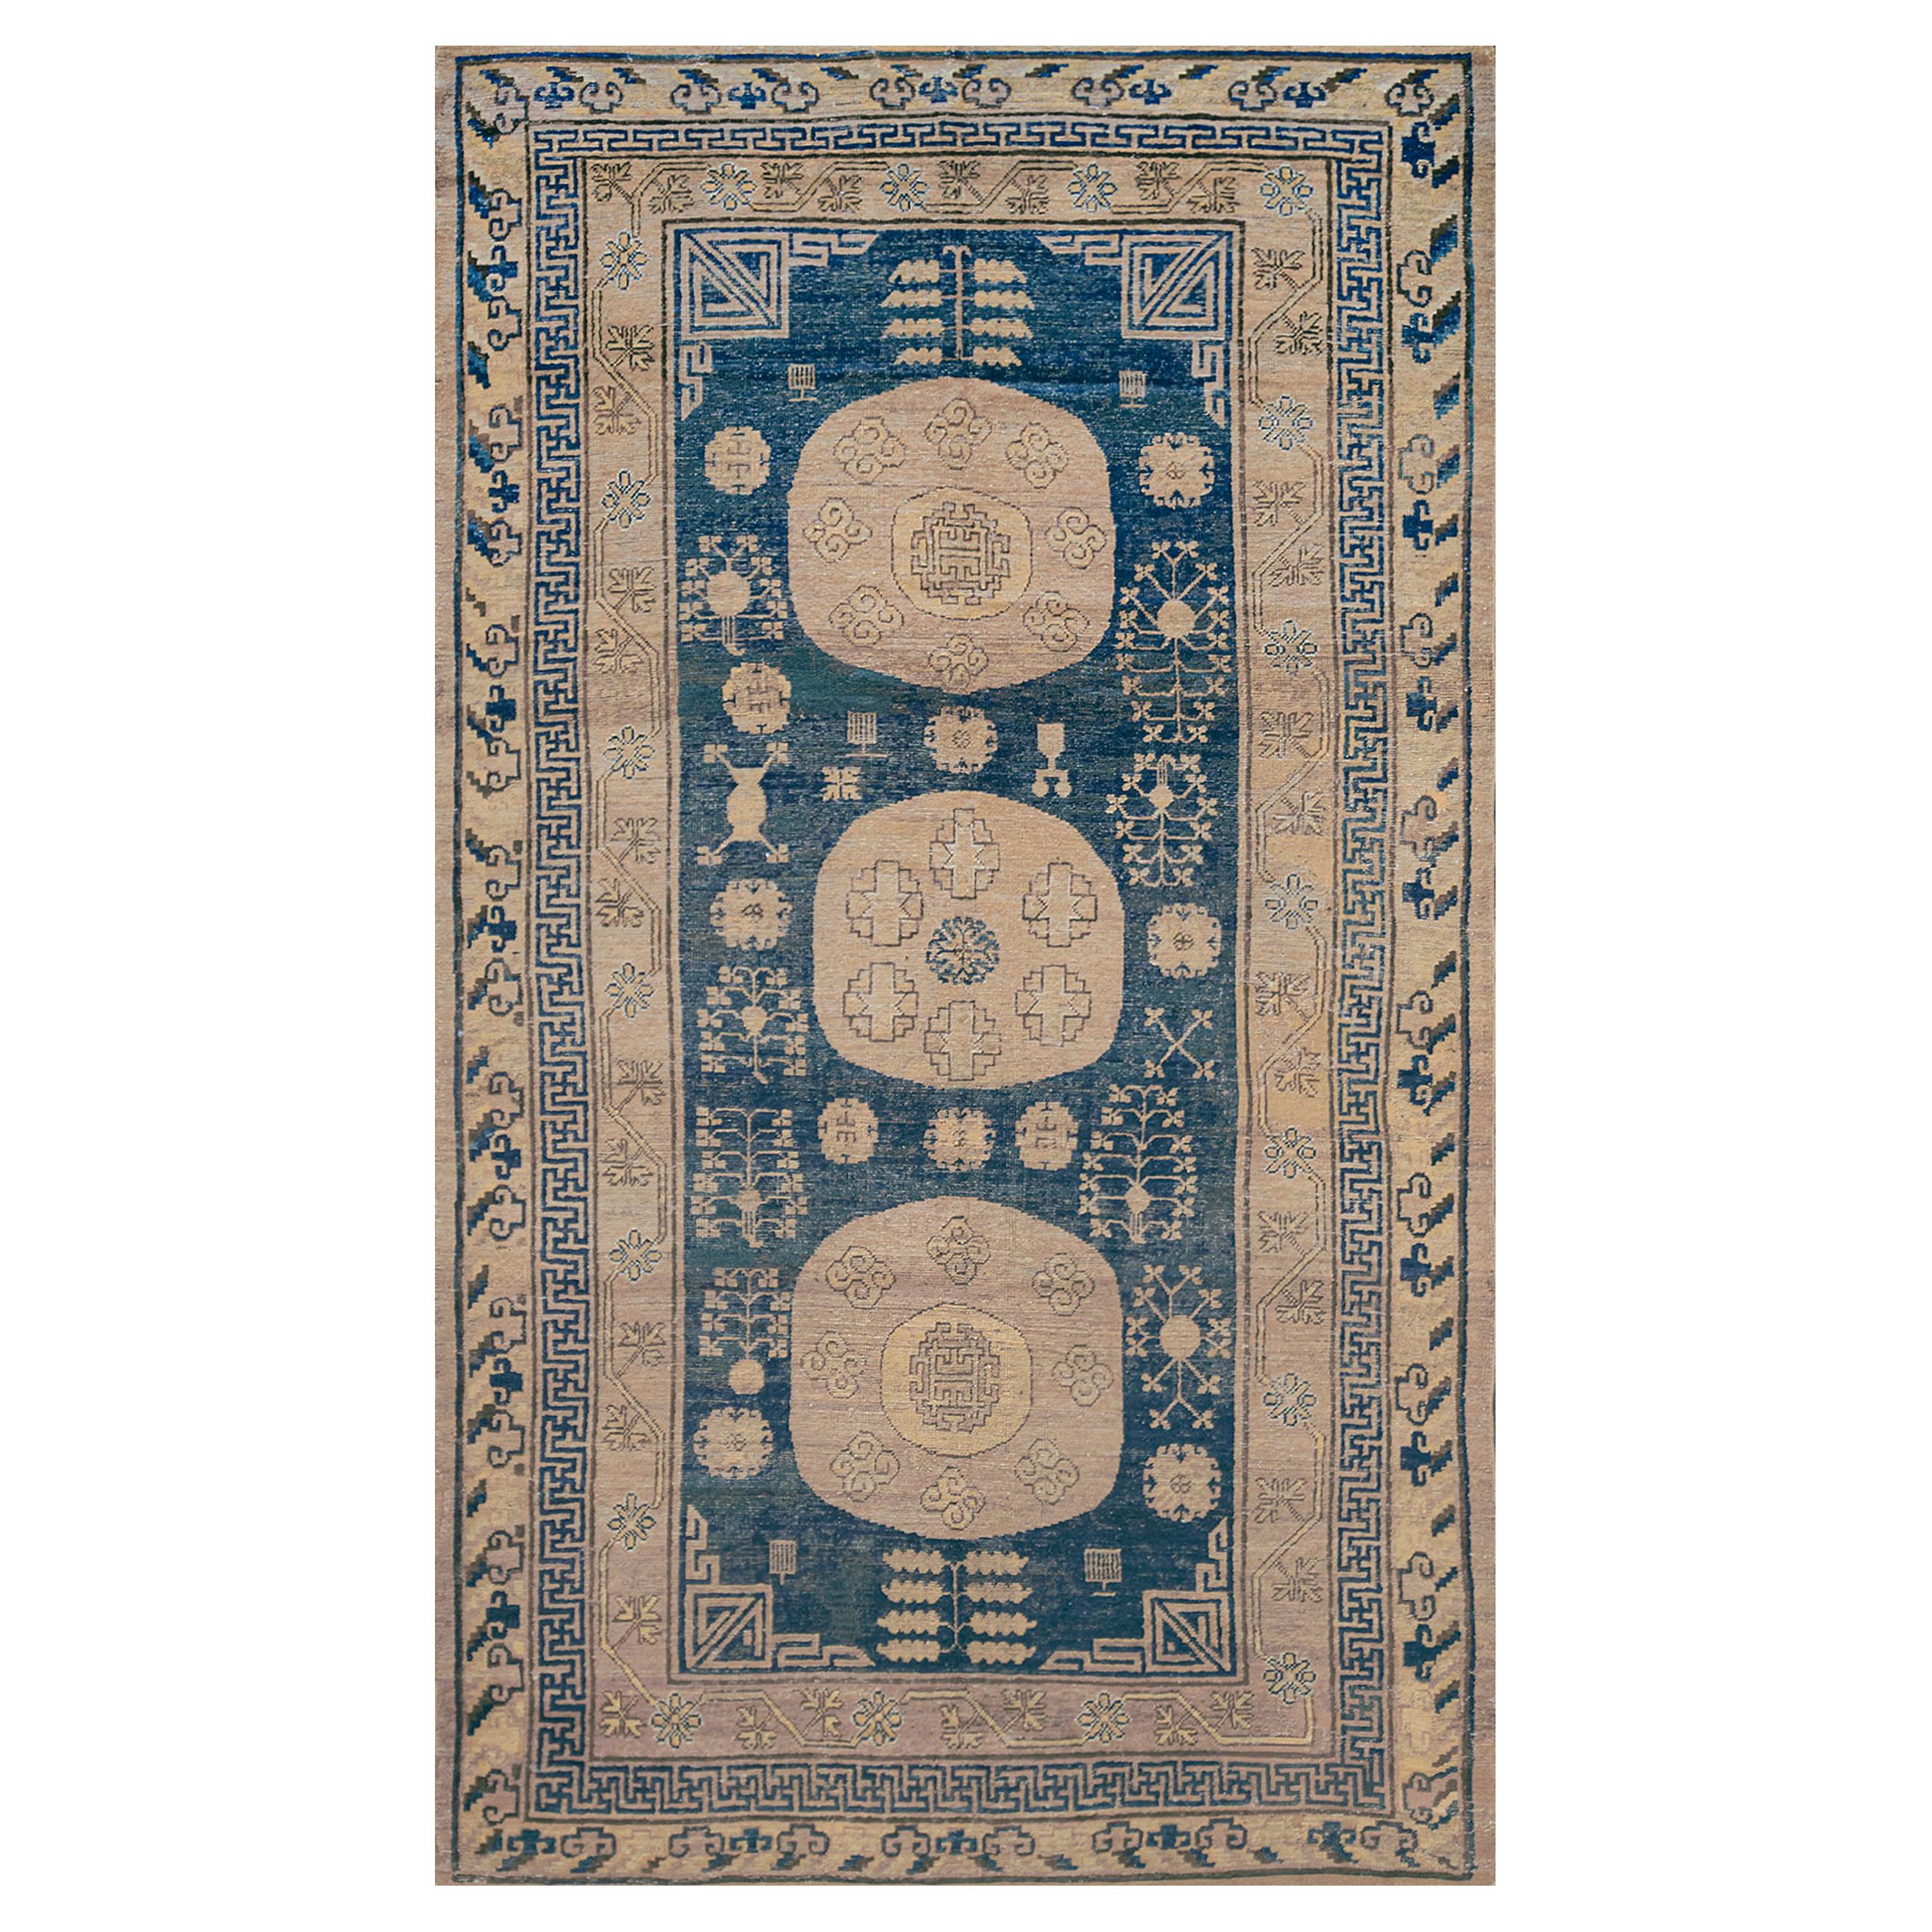 1880s Century Handwoven Antique Wool Khotan Rug For Sale